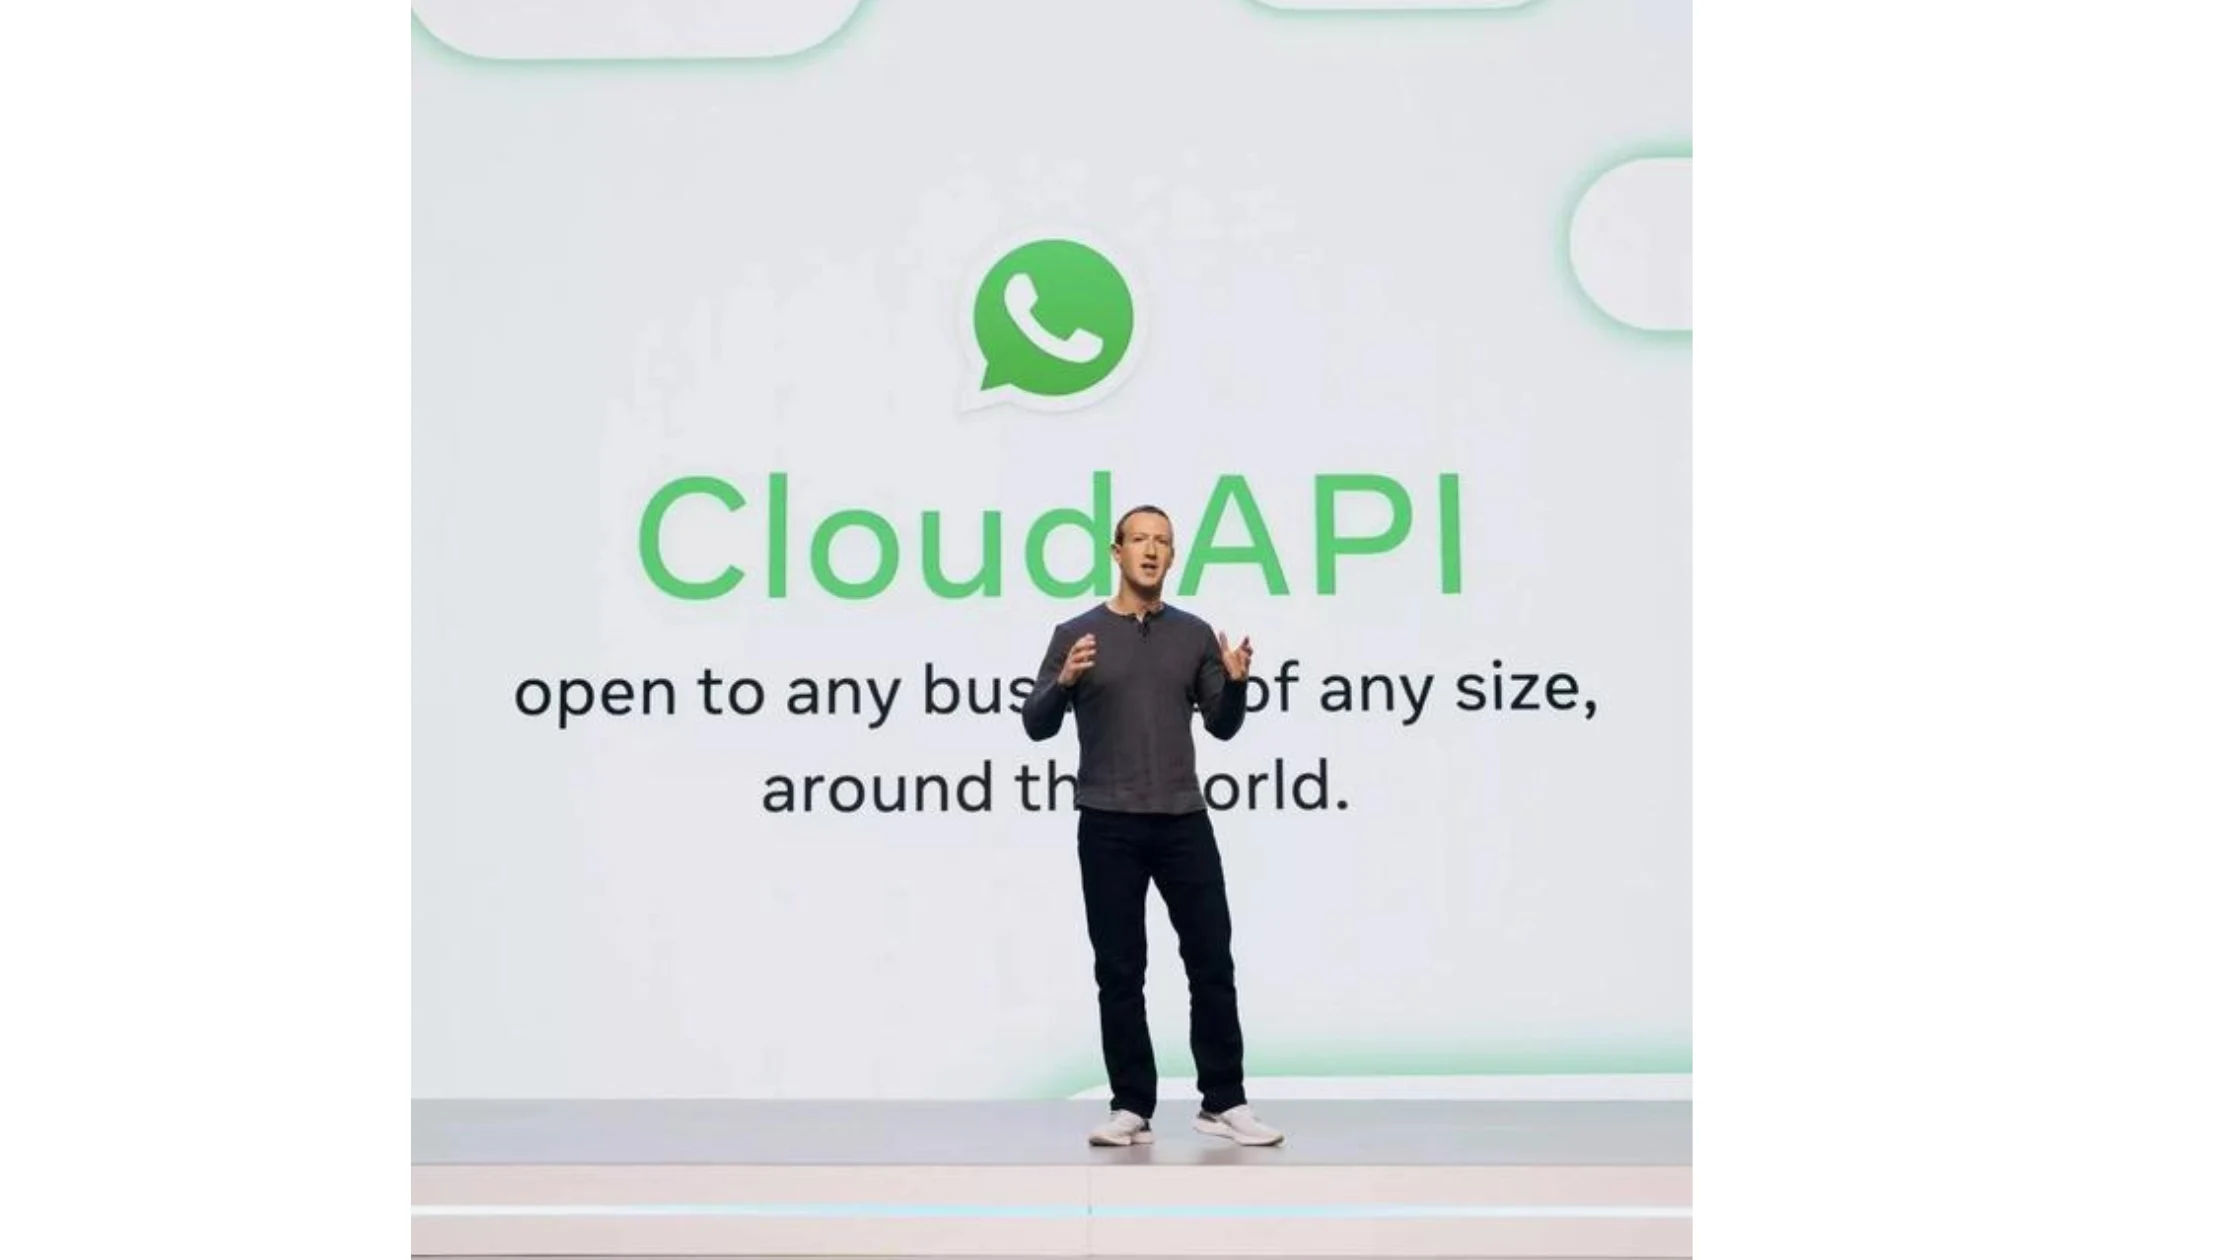 WhatsApp Cloud API Myths